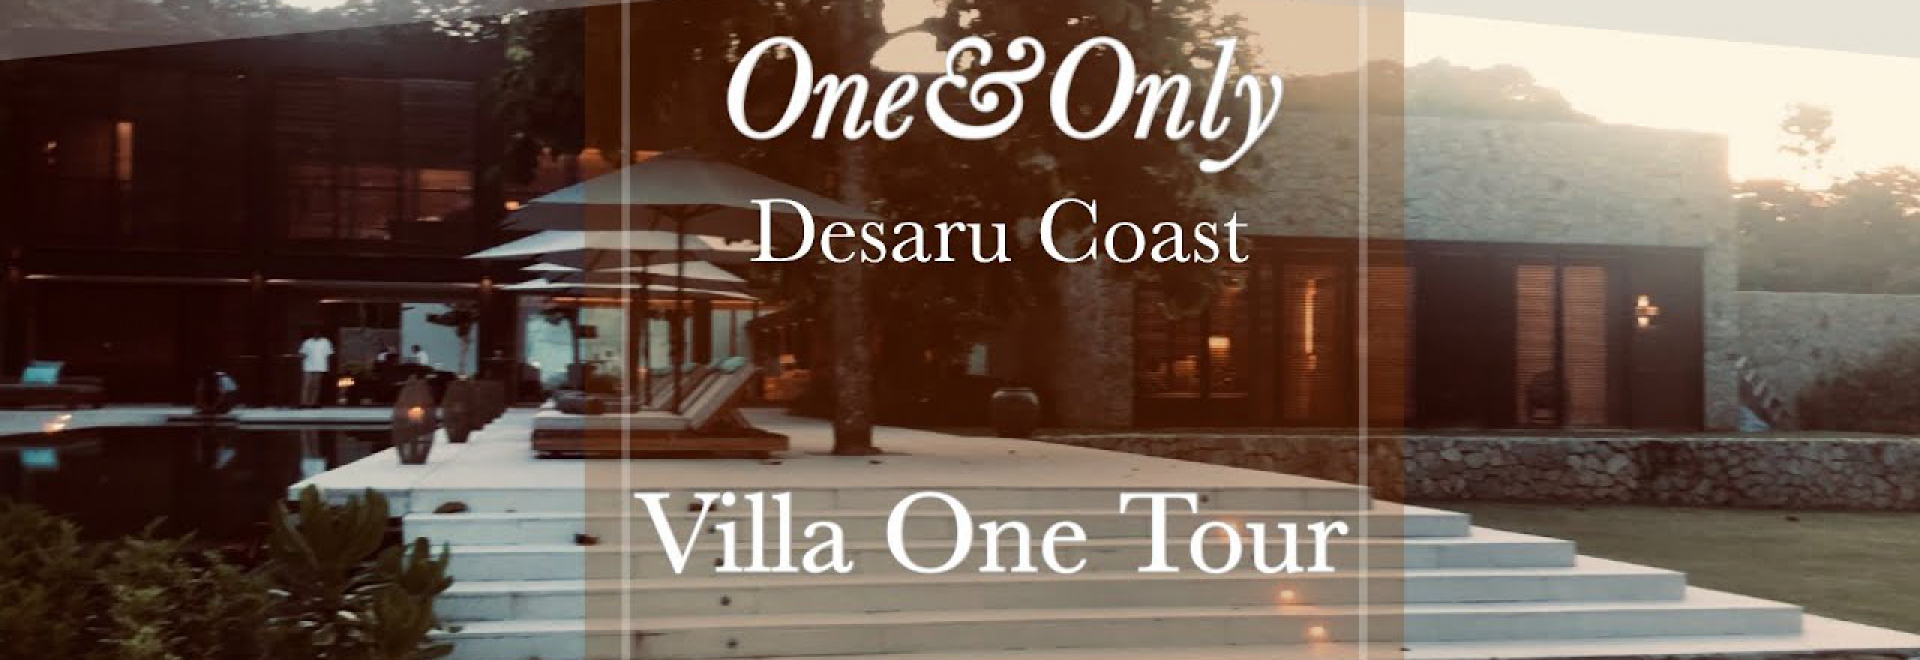 One & Only Desaru Coast, Malaysia - Book. Travel. Play.